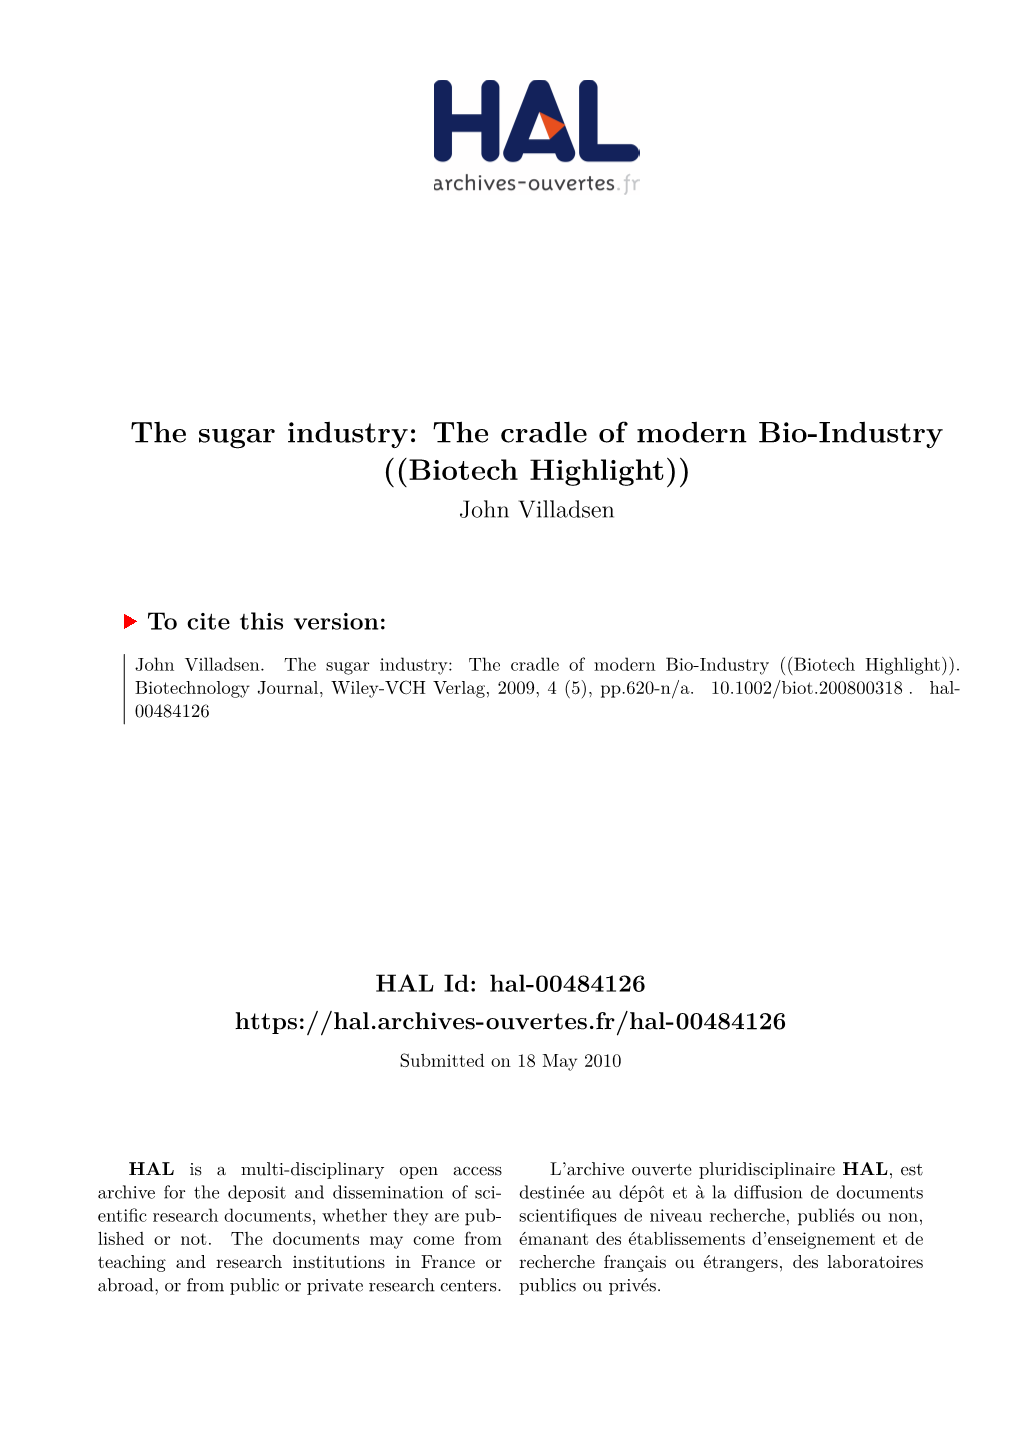 The Sugar Industry: the Cradle of Modern Bio-Industry ((Biotech Highlight)) John Villadsen